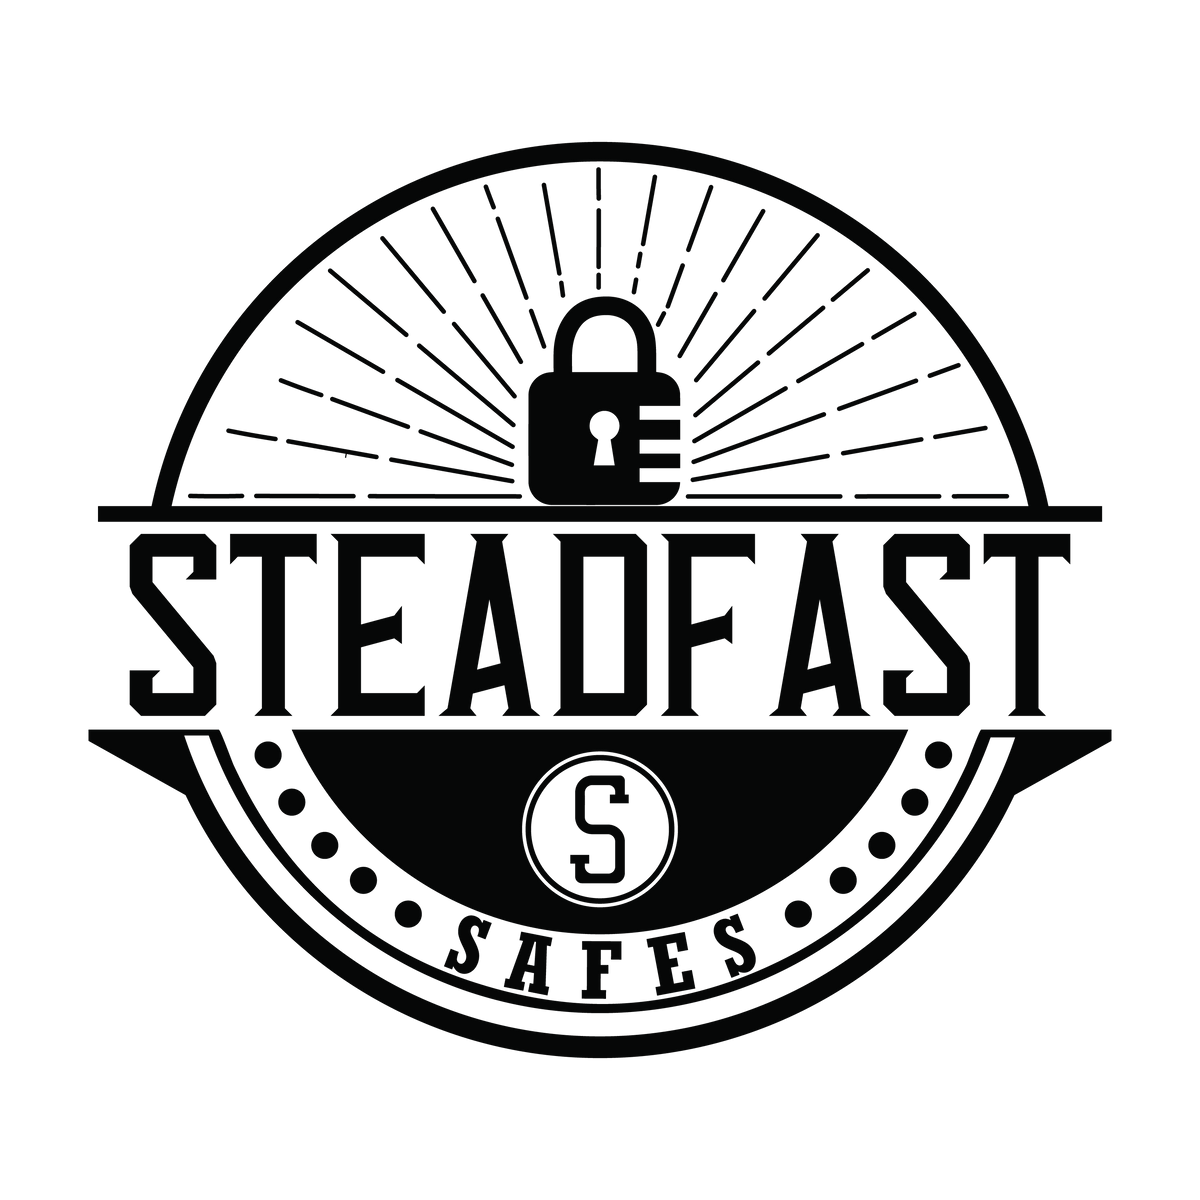 Steadfast Safes